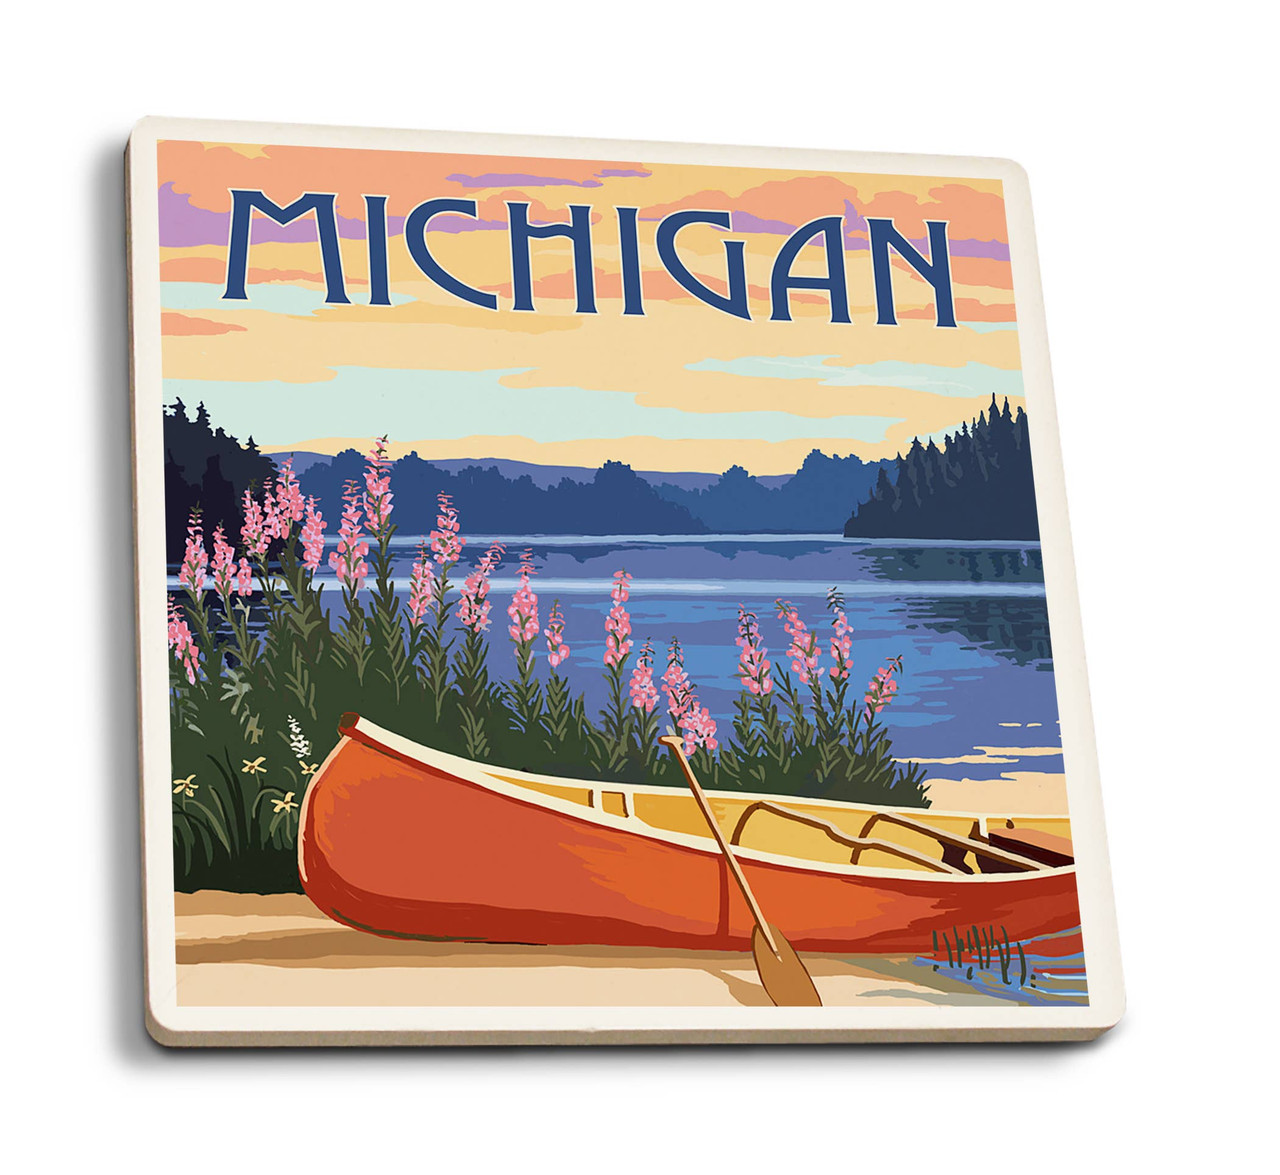 michigan canoe and lake coaster - catching fireflies